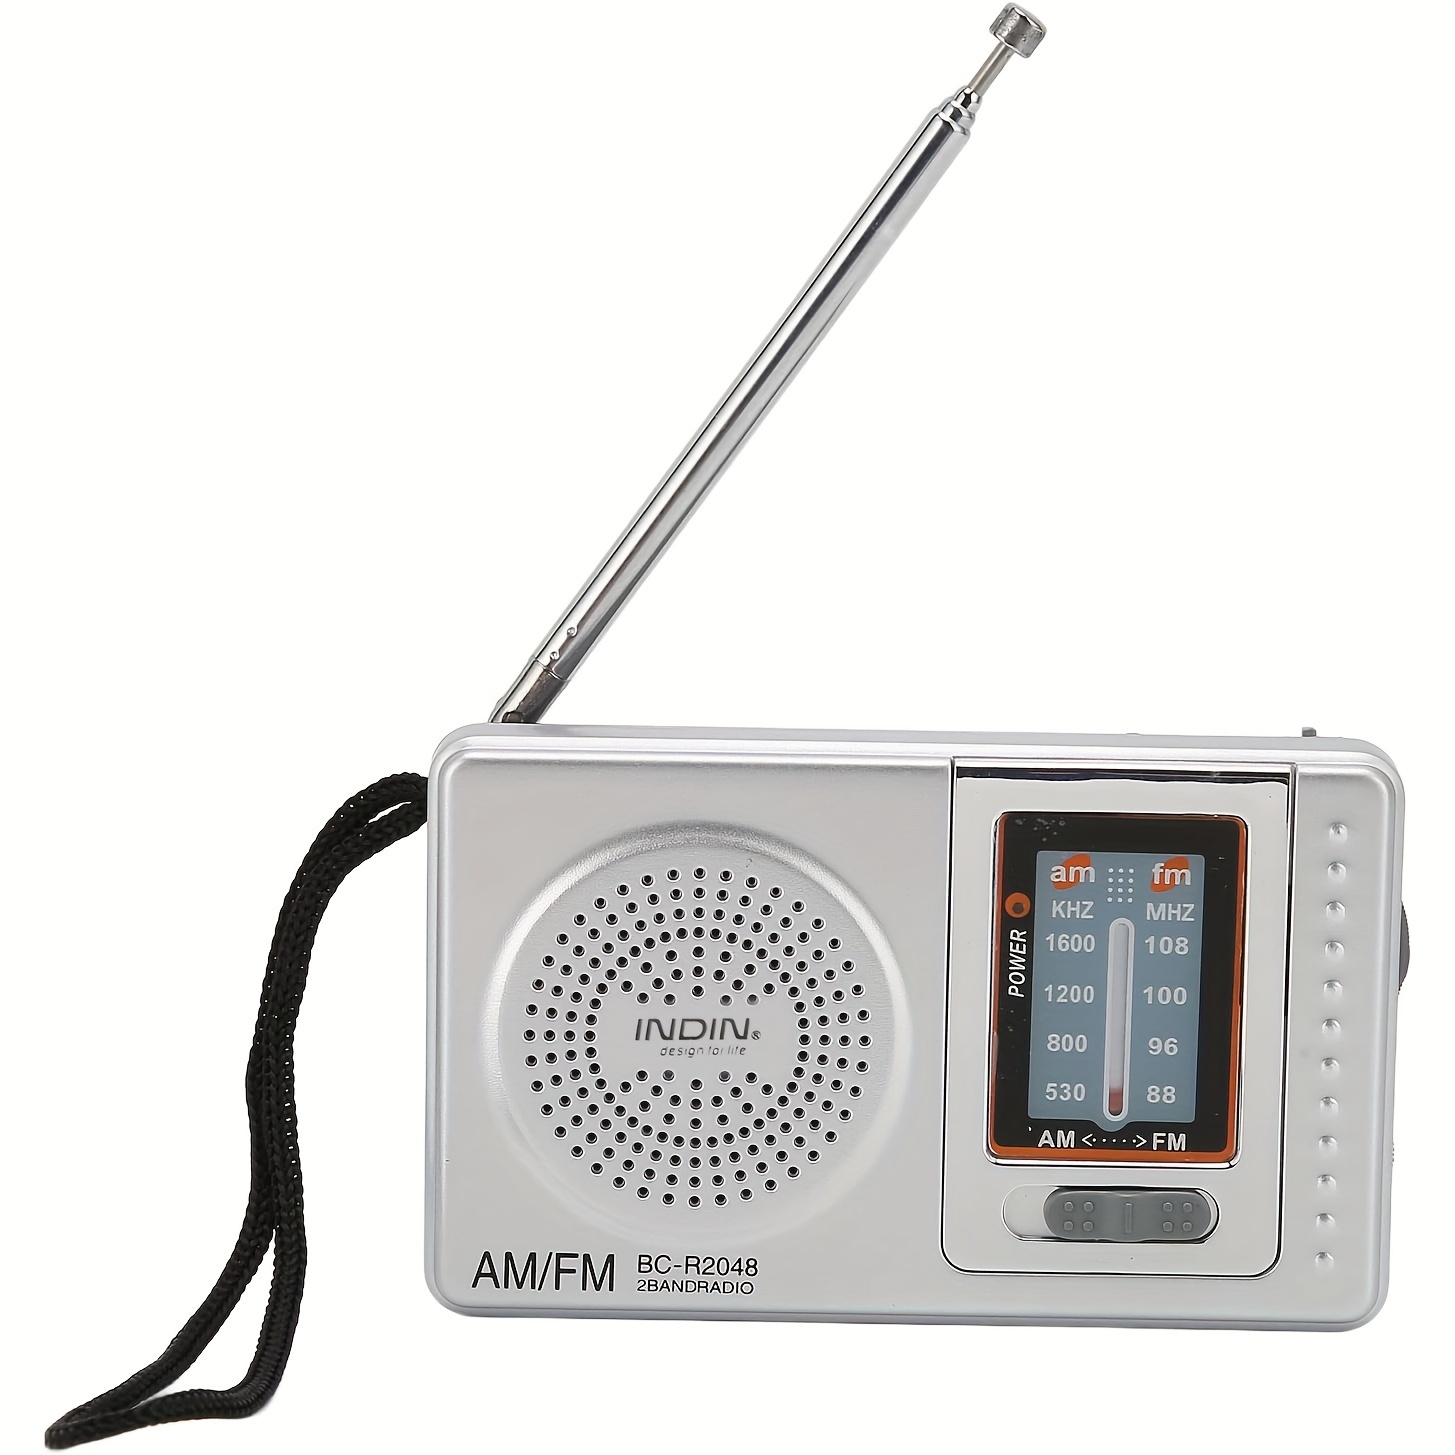 Radio Fm Portatile Mini Lettore Musicale Radio Digitale Chip